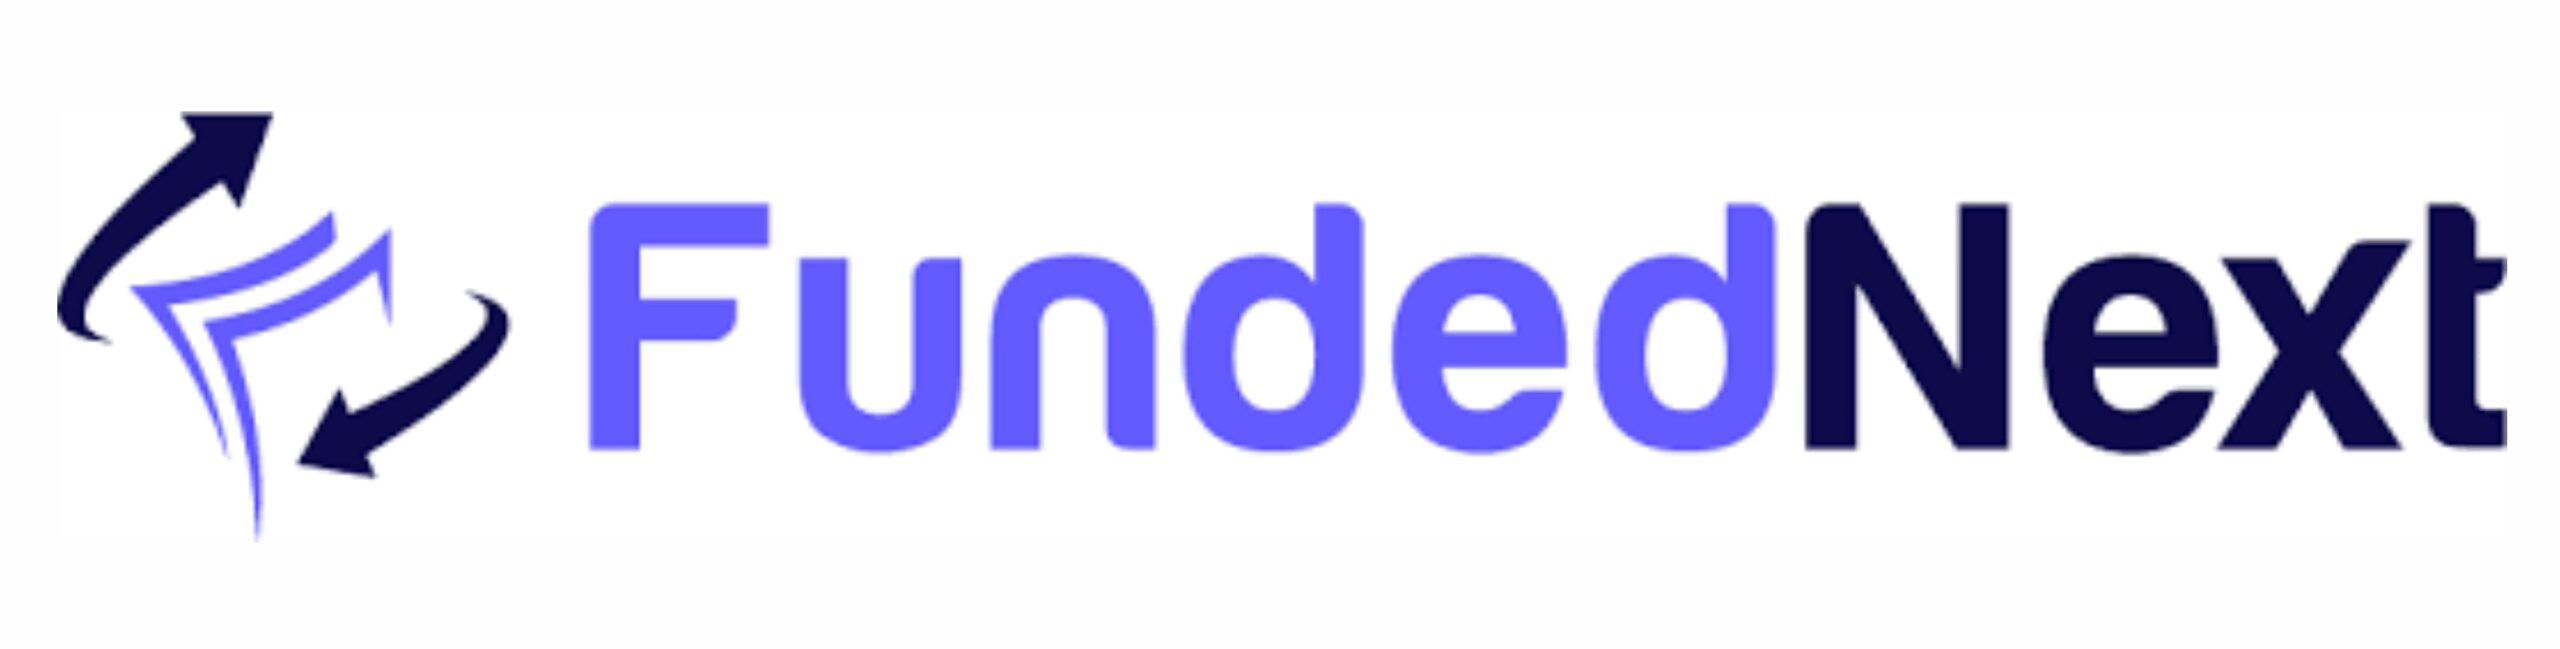 fundednext logo